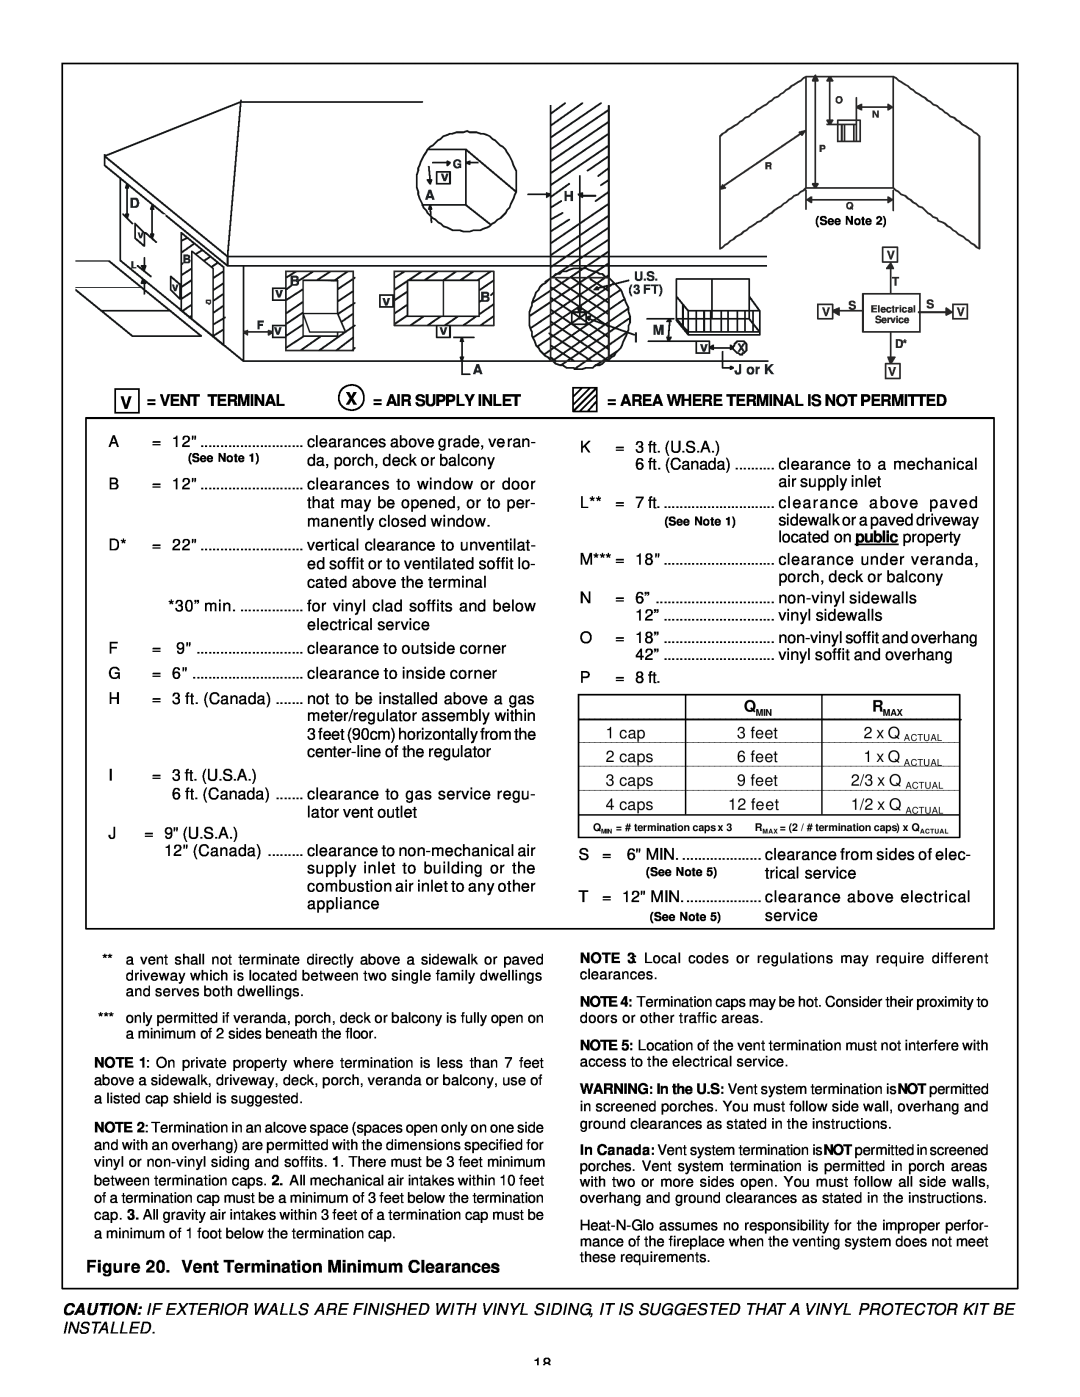 Heat & Glo LifeStyle 36DV manual Vent Termination Minimum Clearances, = Vent Terminal, X = Air Supply Inlet 